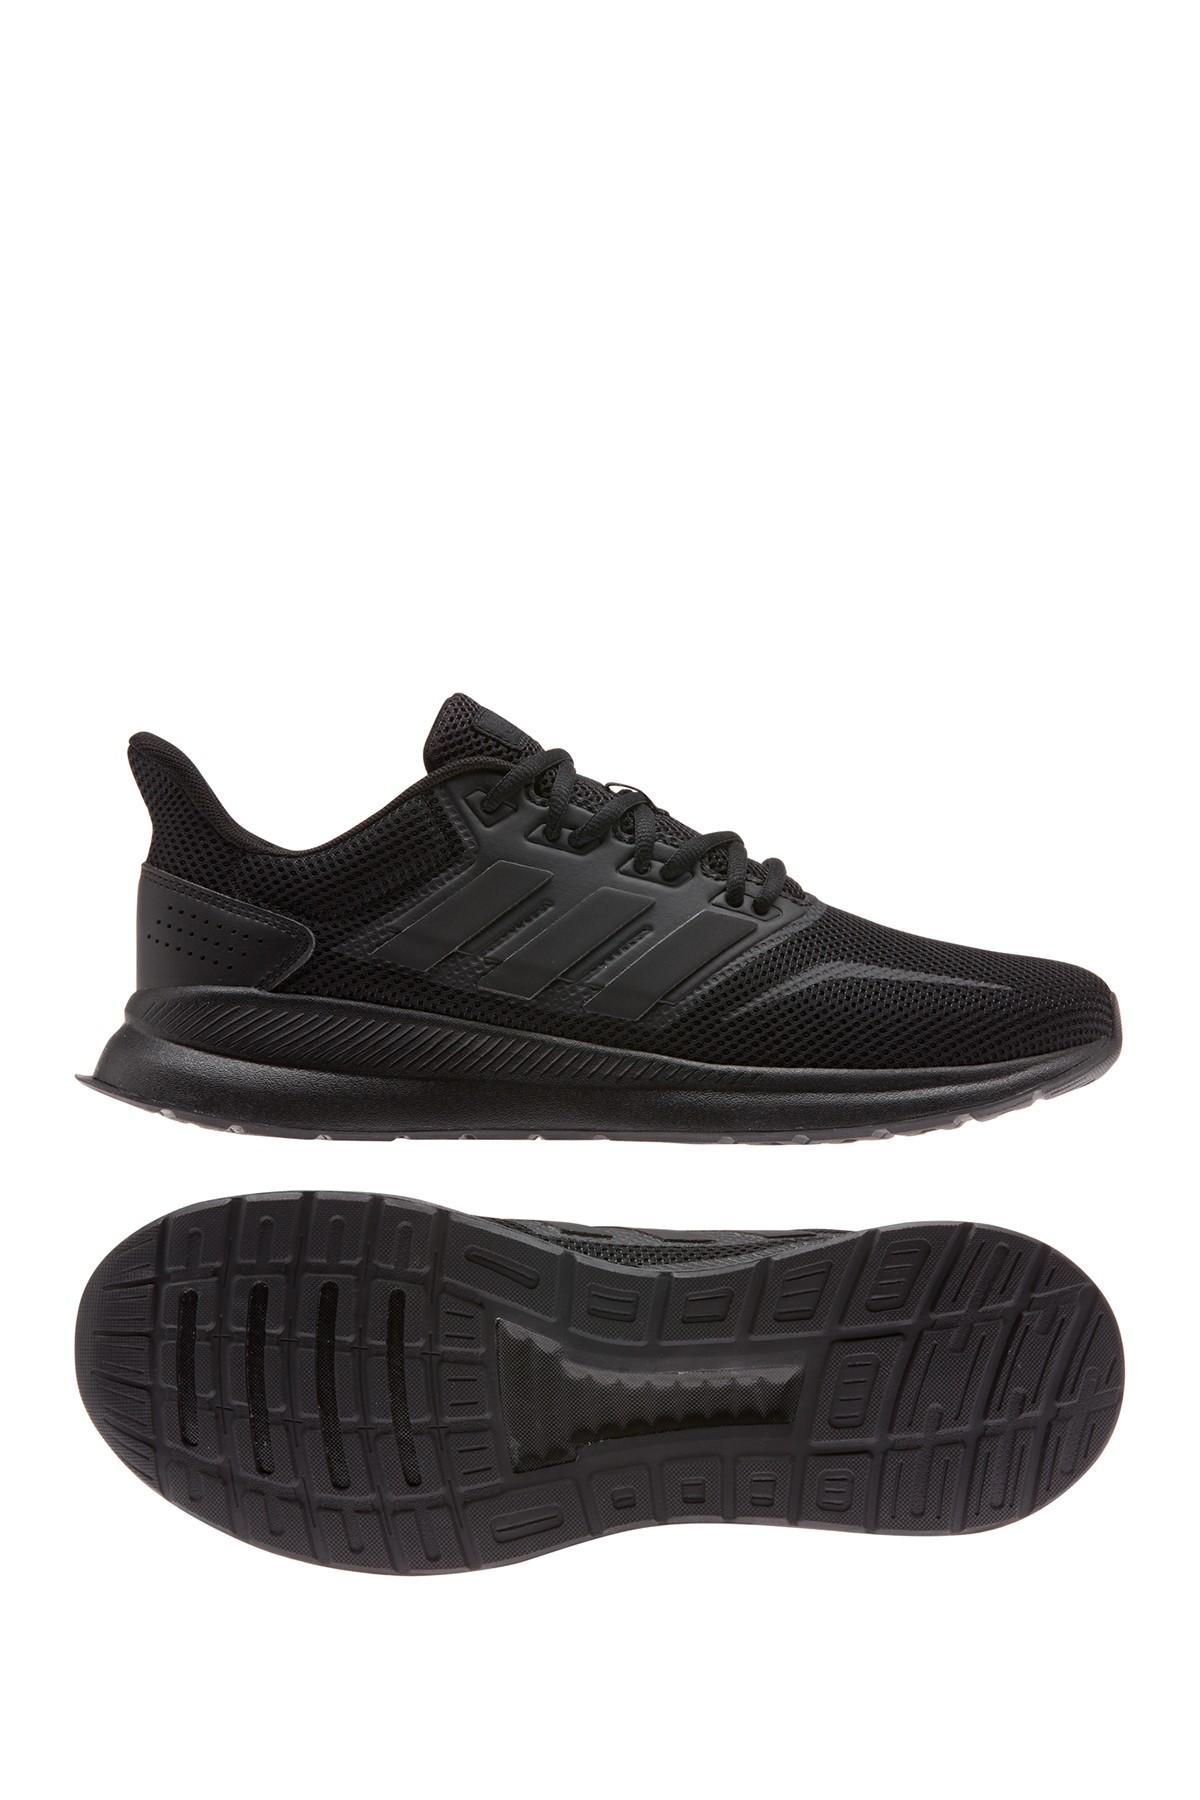 adidas Runfalcon Running Shoe in Black 